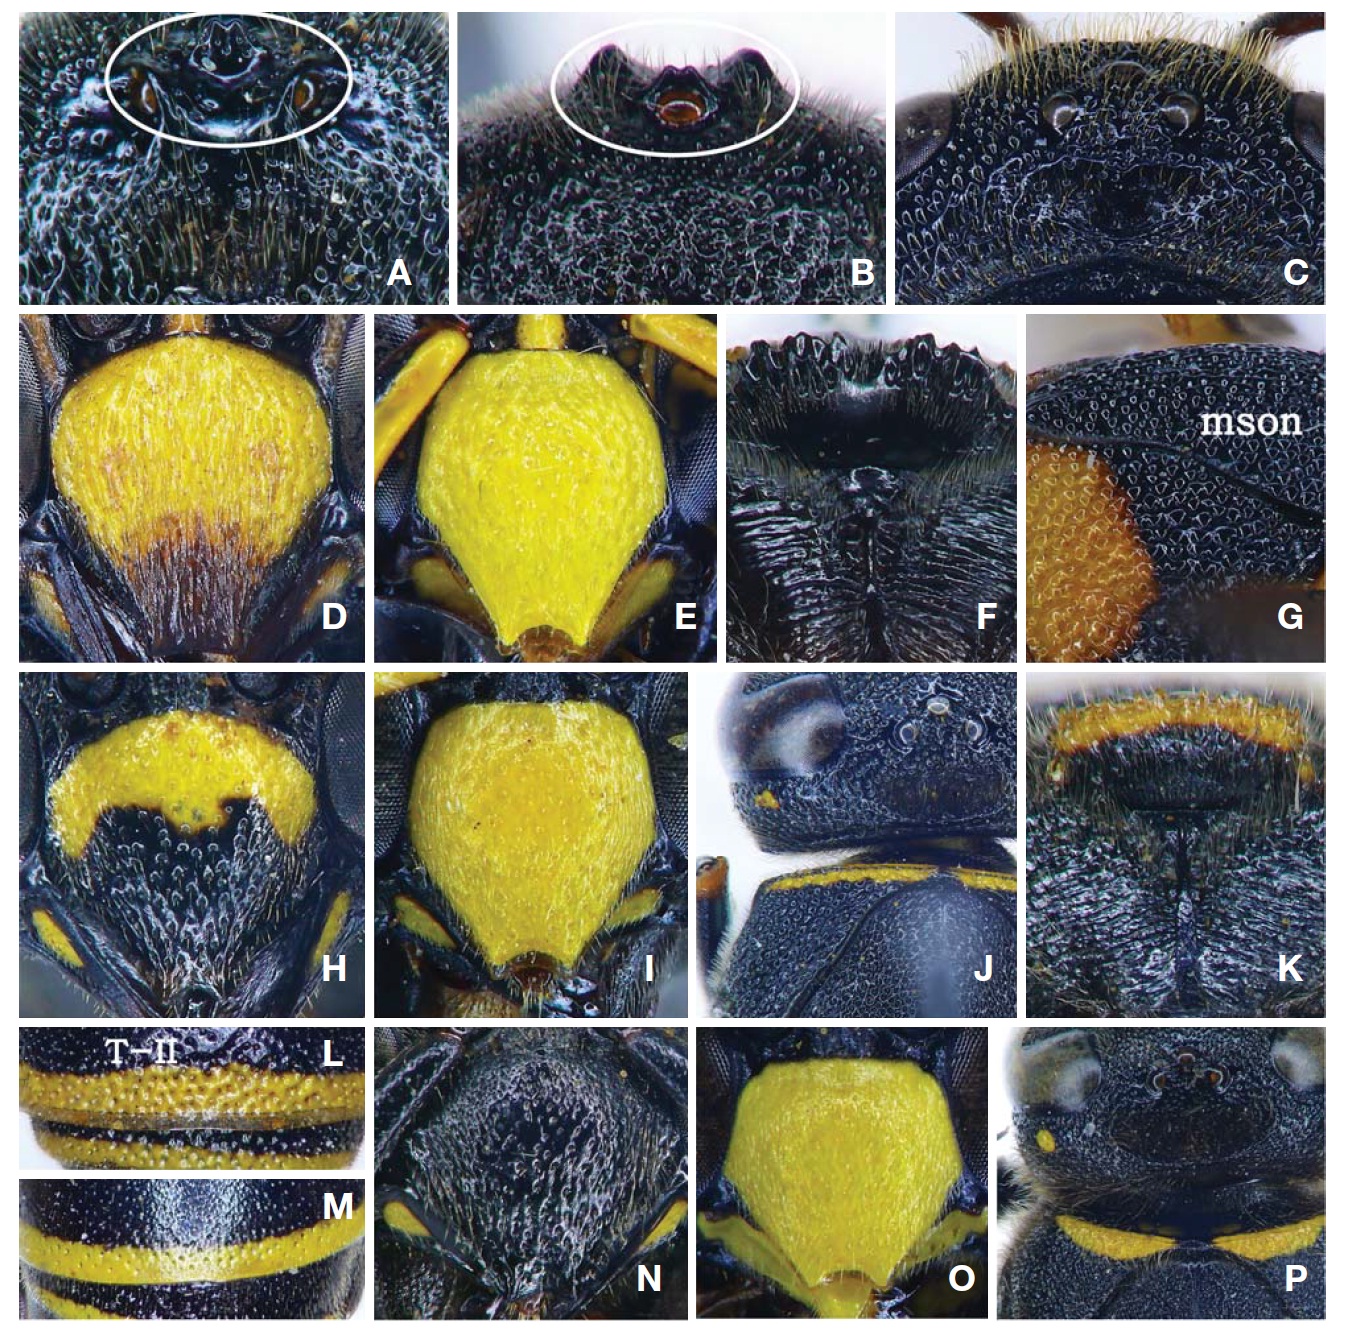 Euodynerus trilobus (A, B), E. dantici violaceipennis (C-G), E. nipanicus (H-L) and E. quadrifasciatus atripes (M-P). A, Tubercles in ocellar region, dorsal view; B, Tubercles in ocellar region, frontal view; C, Head, dorsal view; D, Clypeus, female; E, Clypeus, male; F, Posterior vertical face of metanotum and posterior propodeal face; G, Mesosoma and pronotum, lateral view showing almost bare face; H, Clypeus, femalw; I, Clypeus, male; J, Head and mesosoma (mson) showing short erect dense hairs; K, Posterior vertical face of metanotum and posterior propodeal face; L, Metasomal tergum II (T-II) with apical lamella; M, Tergum II without apical lamella; N, Clypeus, female; O, Clypeus, male; P, Head and mesosoma showing long disheveled dense hairs.